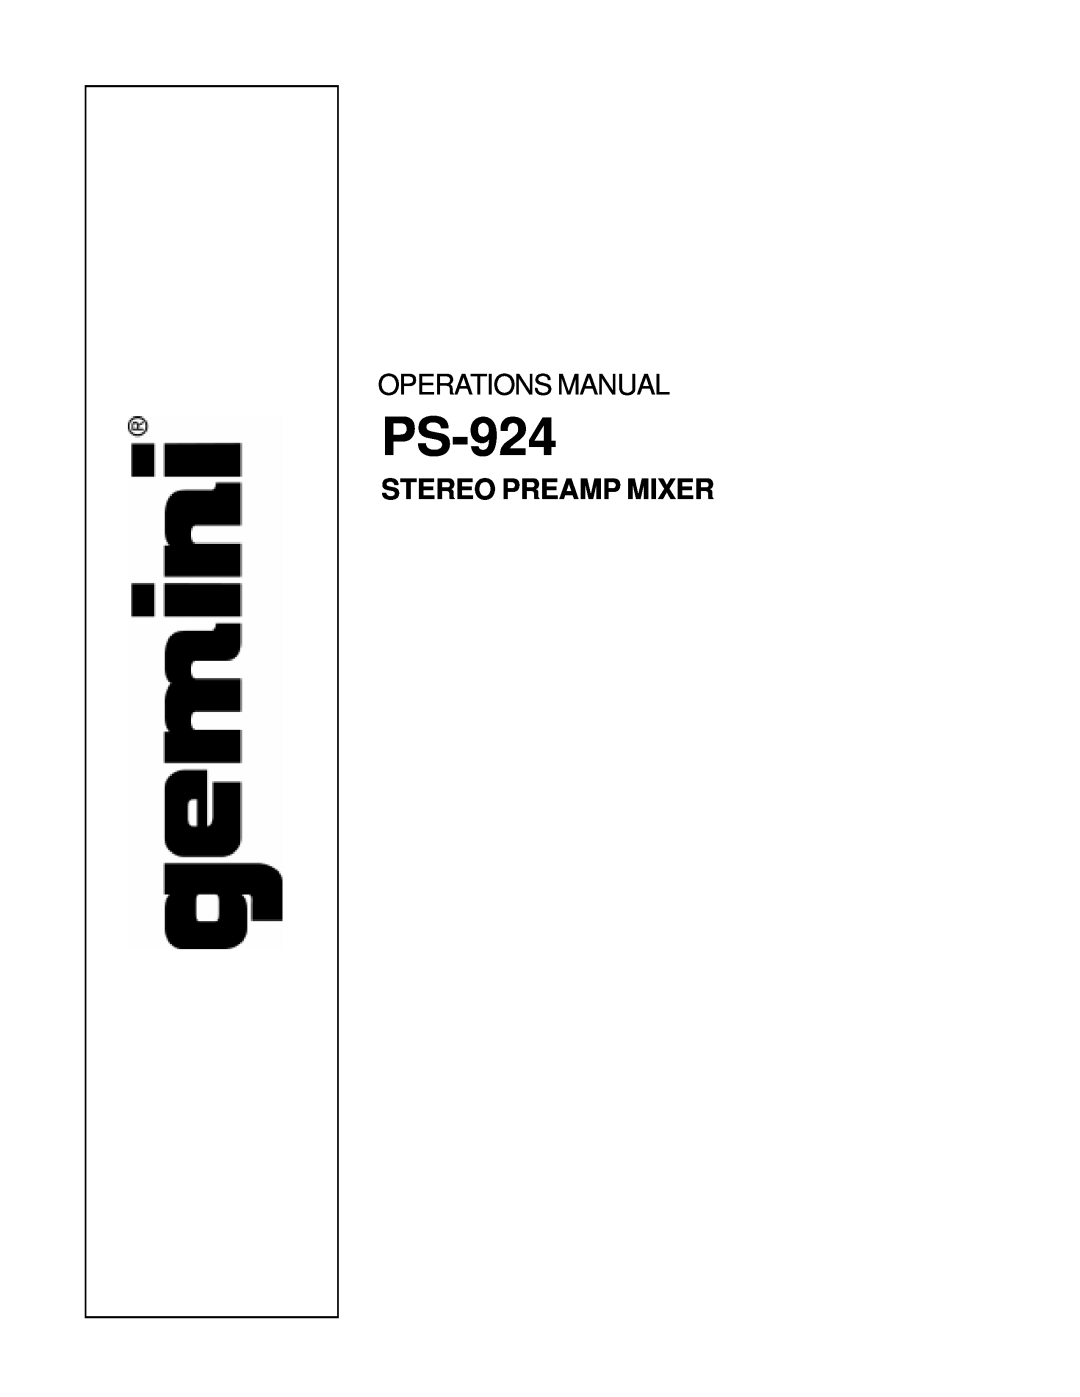 Gemini PS-924 manual Operations Manual, Stereo Preamp Mixer 